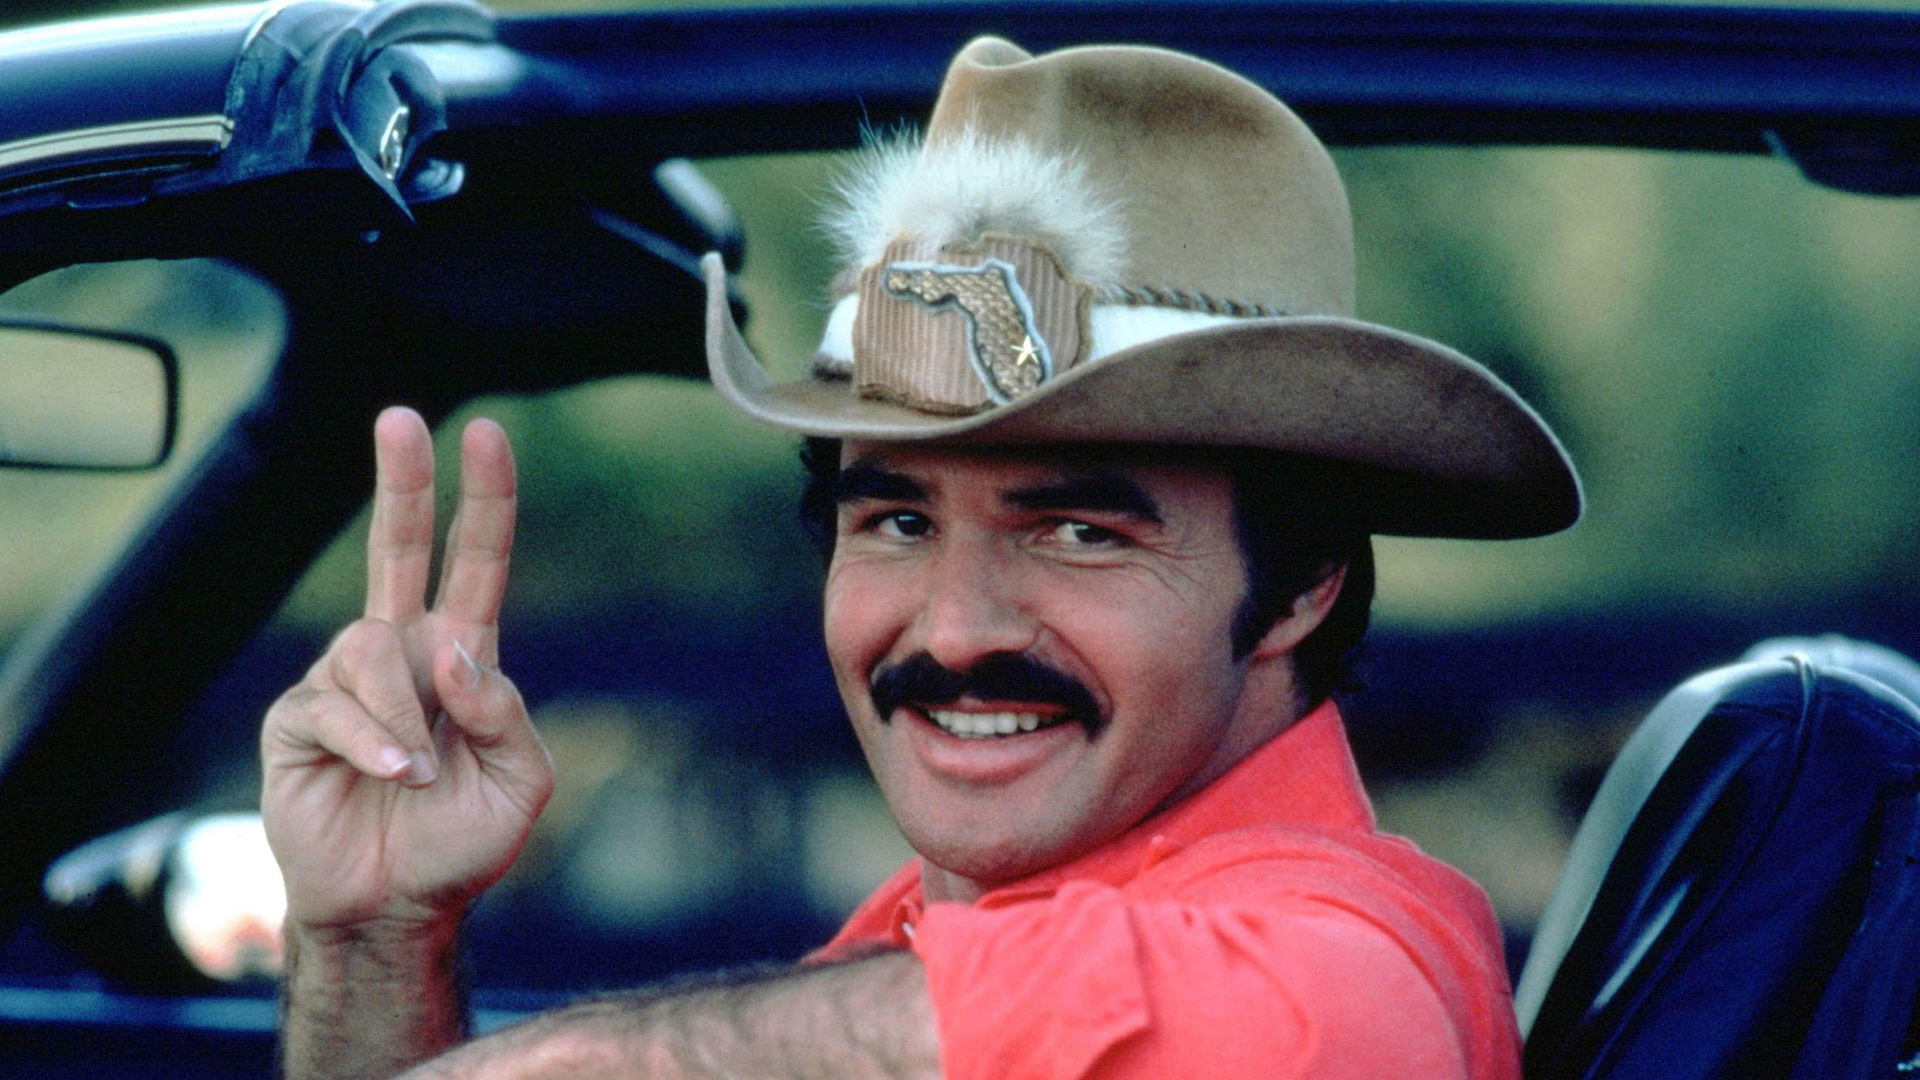 Burt Reynolds in a car wearing pink shirt and cowboy hat